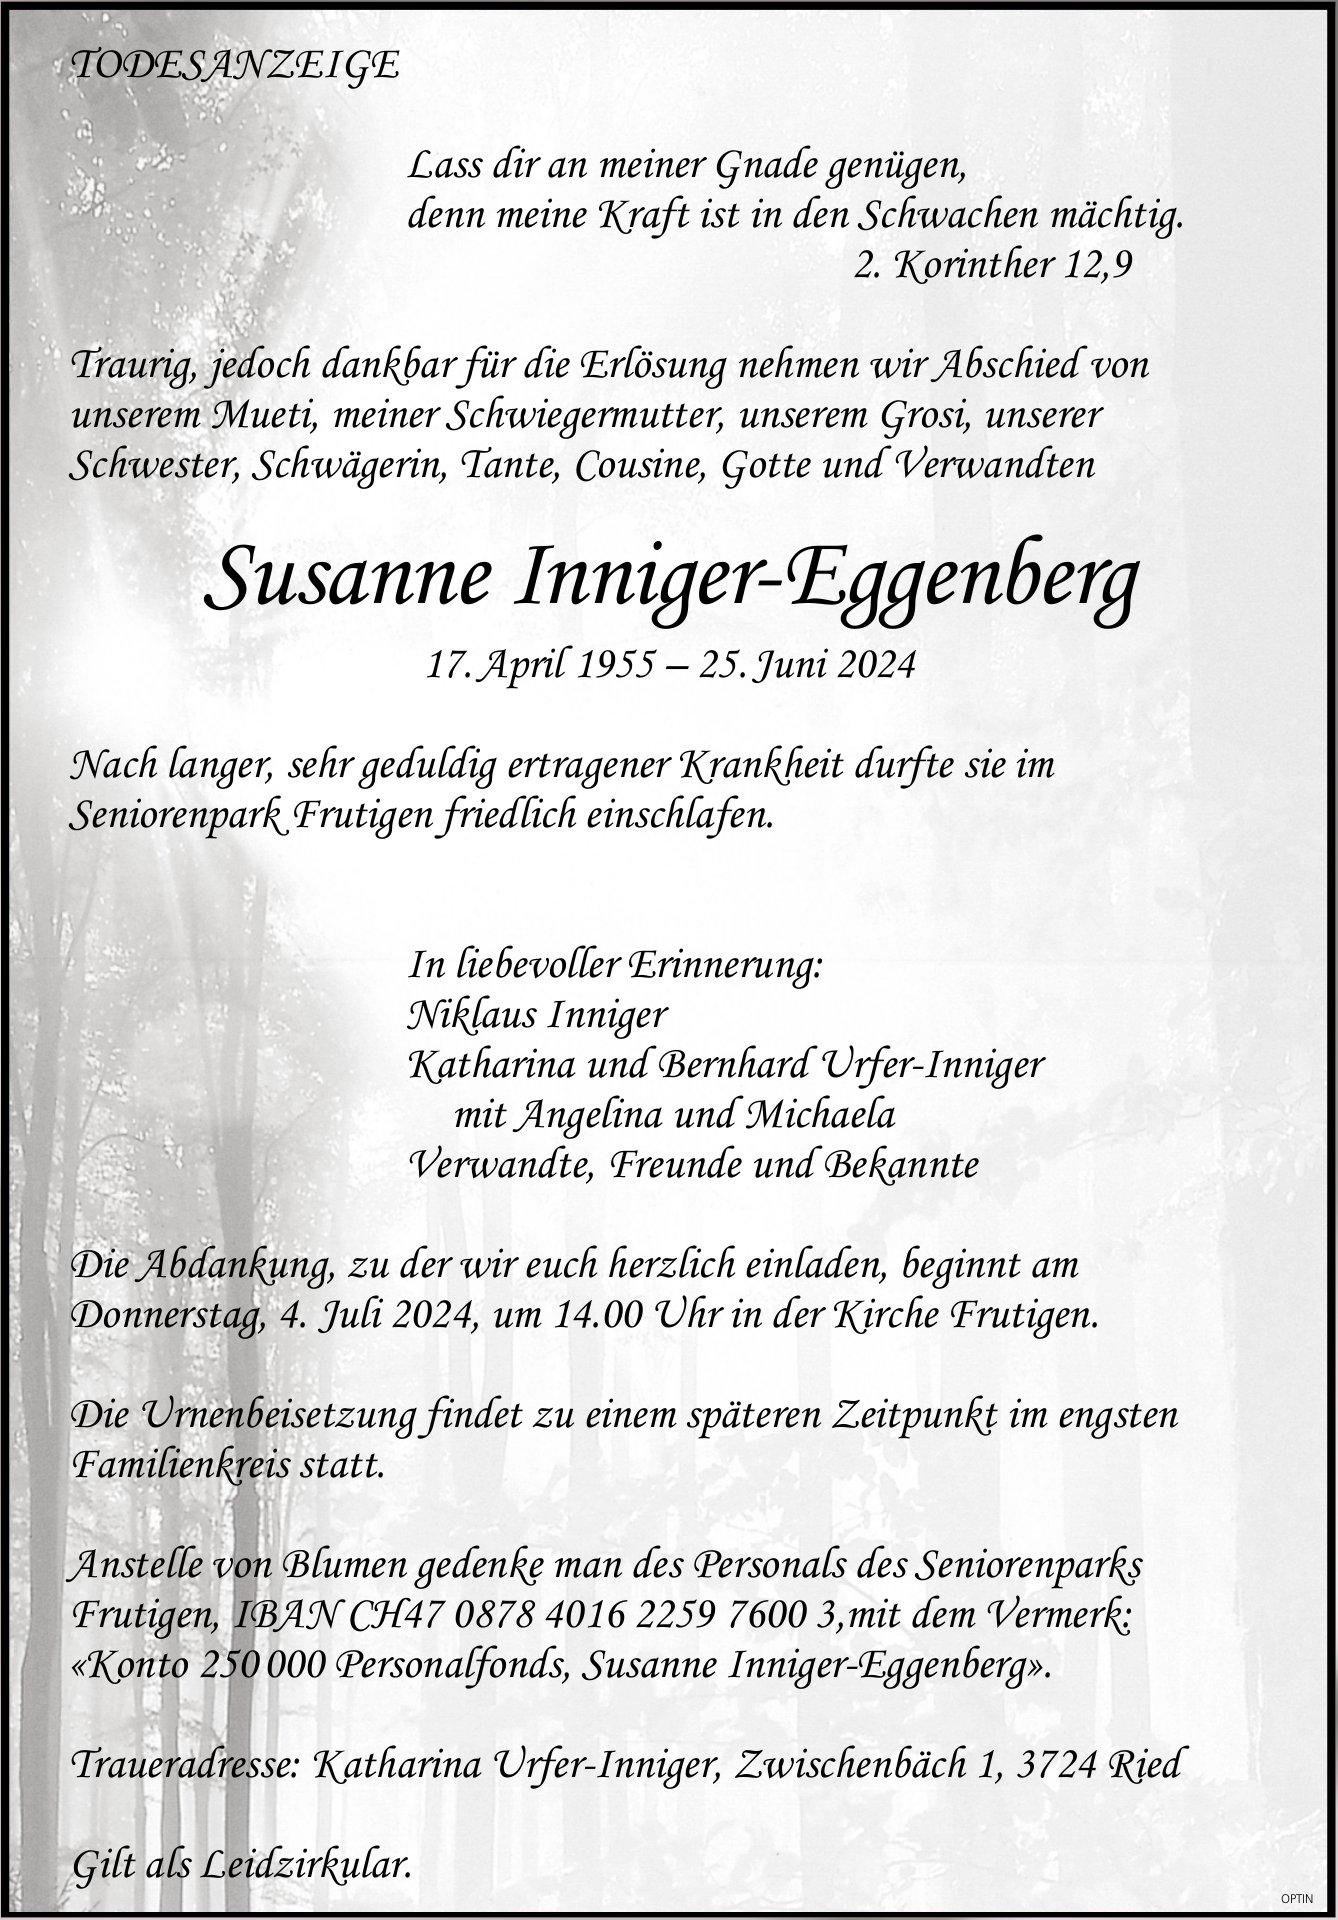 Susanne Inniger-Eggenberg, Juni 2024 / TA